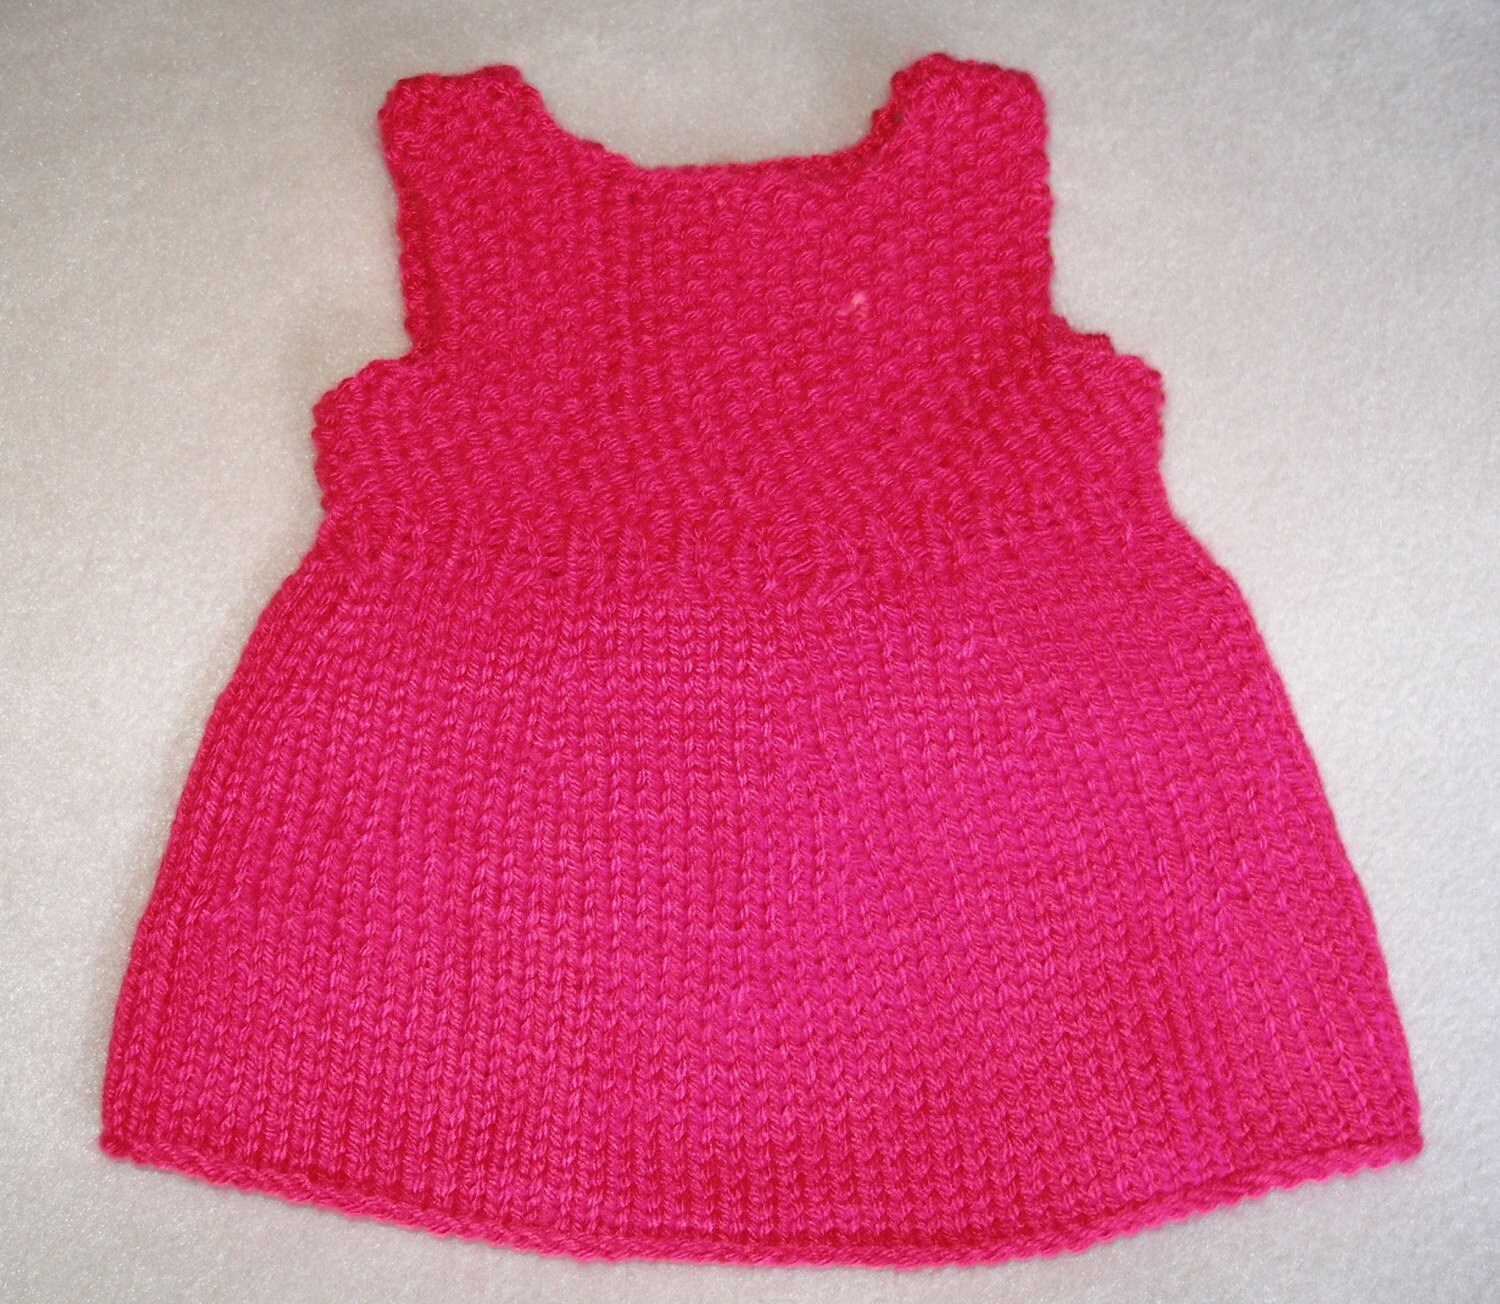 EASY RED DRESS Doll Knitting Pattern | Etsy